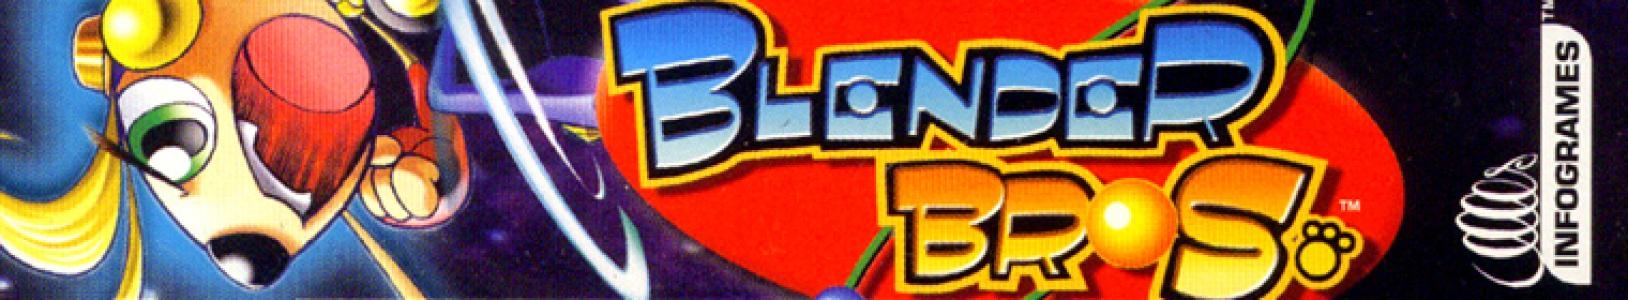 Blender Bros. banner